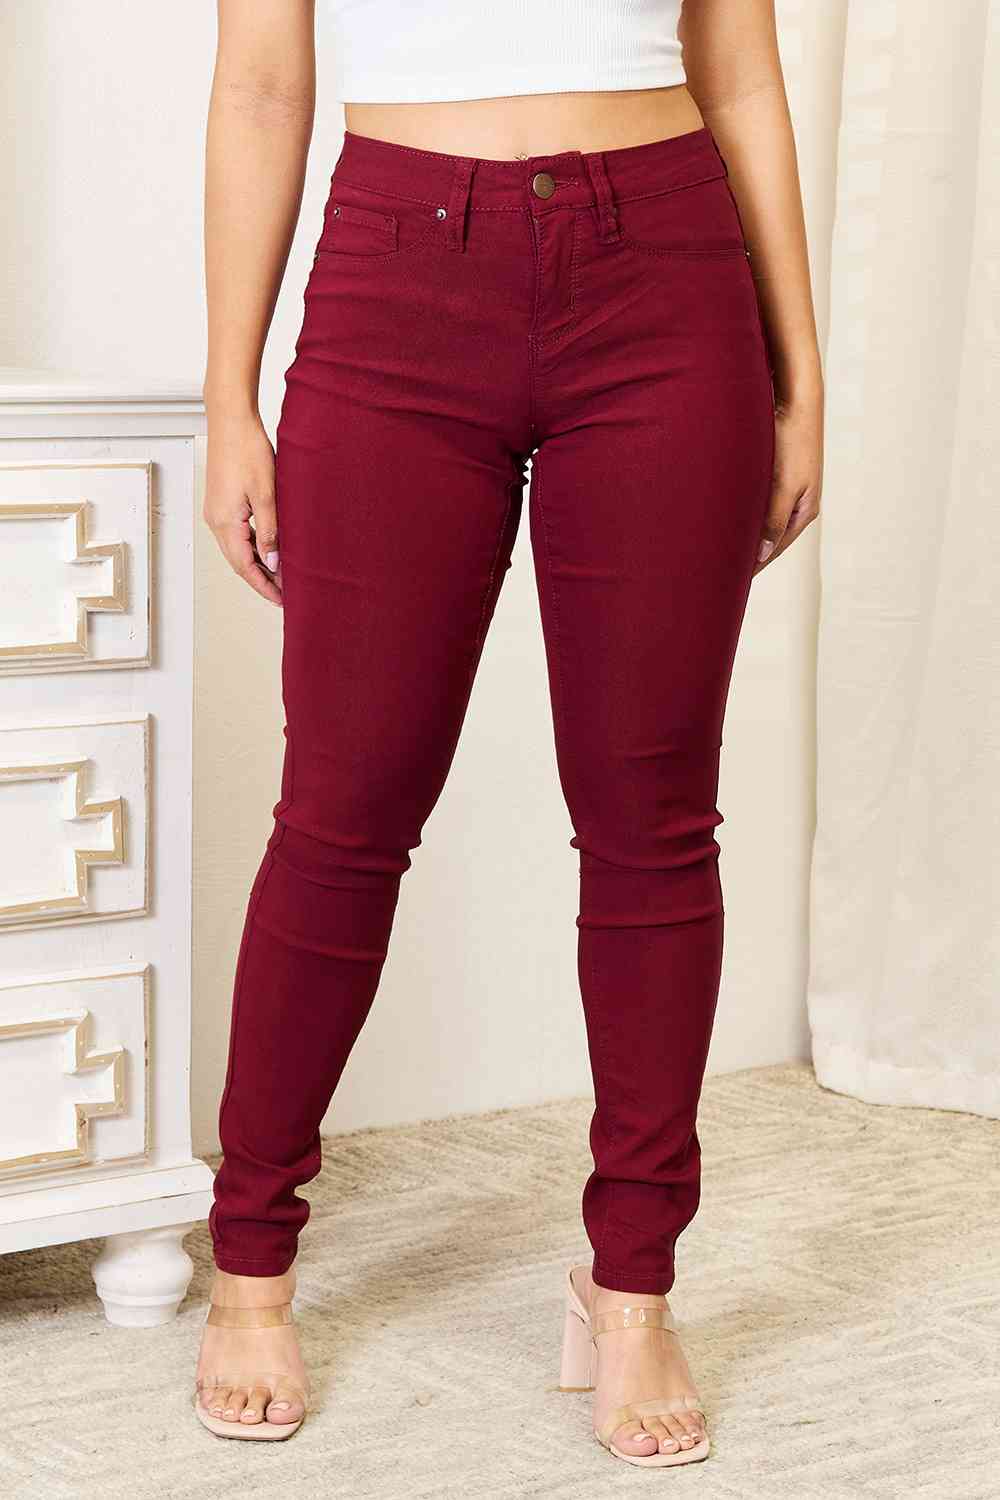 YMI Jeanswear Skinny Jeans with Pockets  Krazy Heart Designs Boutique Wine S 